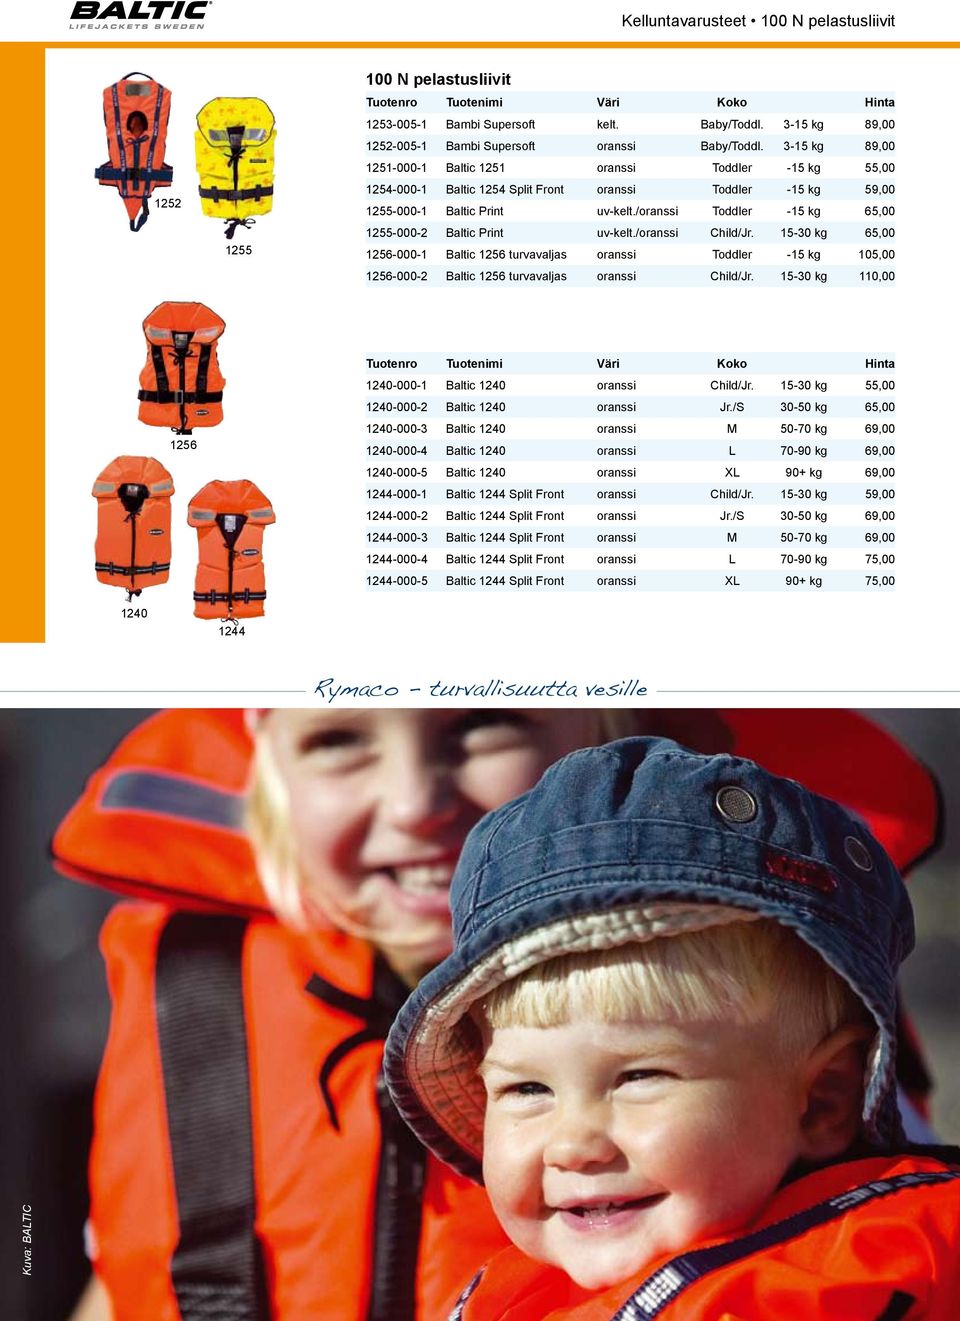 /oranssi Toddler -15 kg 65,00 1255-000-2 Baltic Print uv-kelt./oranssi Child/Jr.